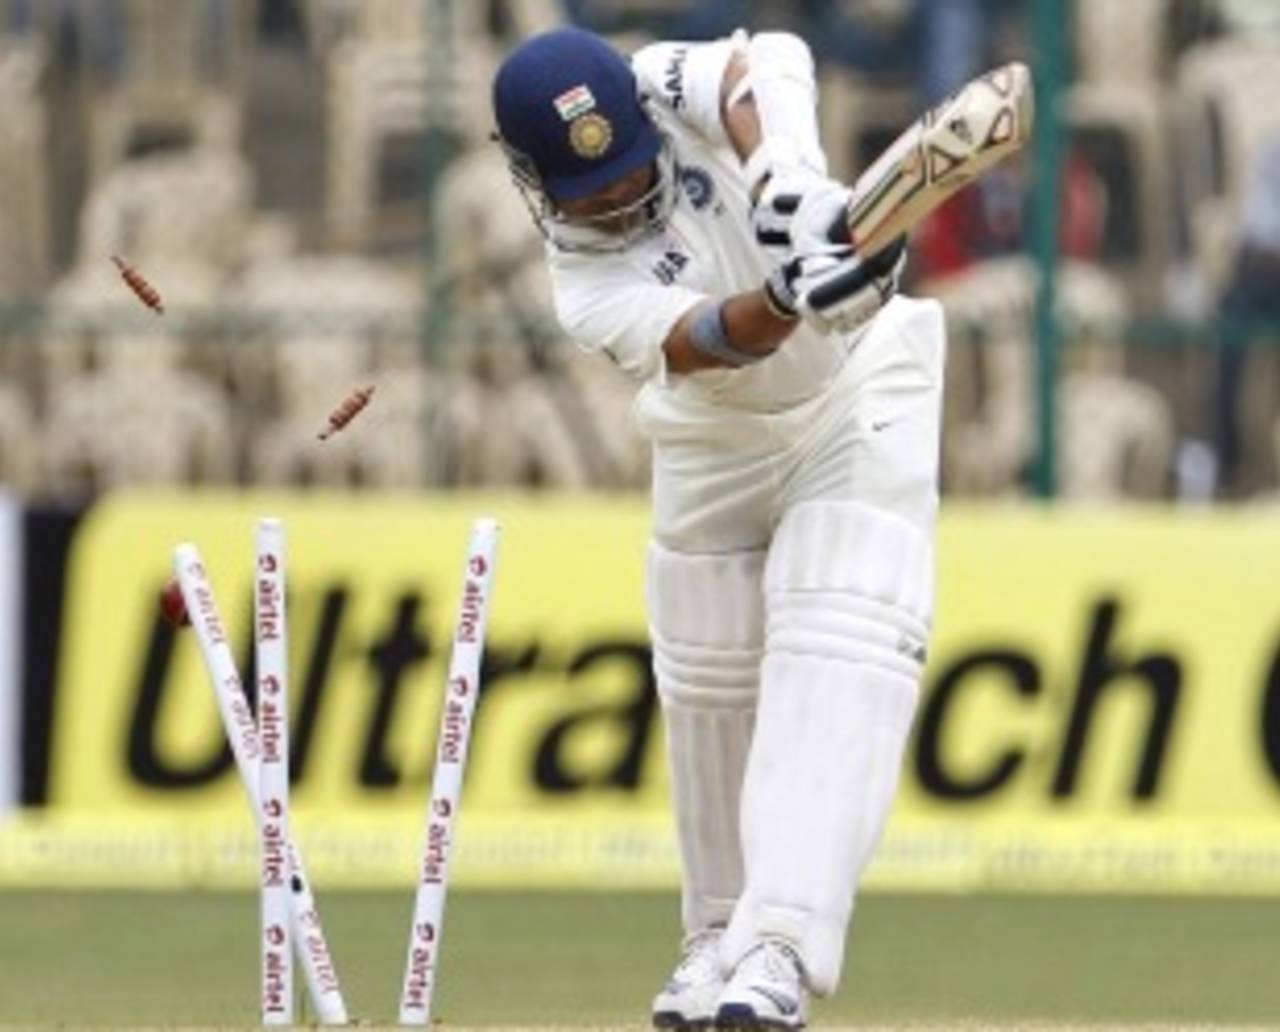 Sachin Tendulkar missed a straight ball, India v New Zealand, 2nd Test, Bangalore, 2nd day, September 1, 2012